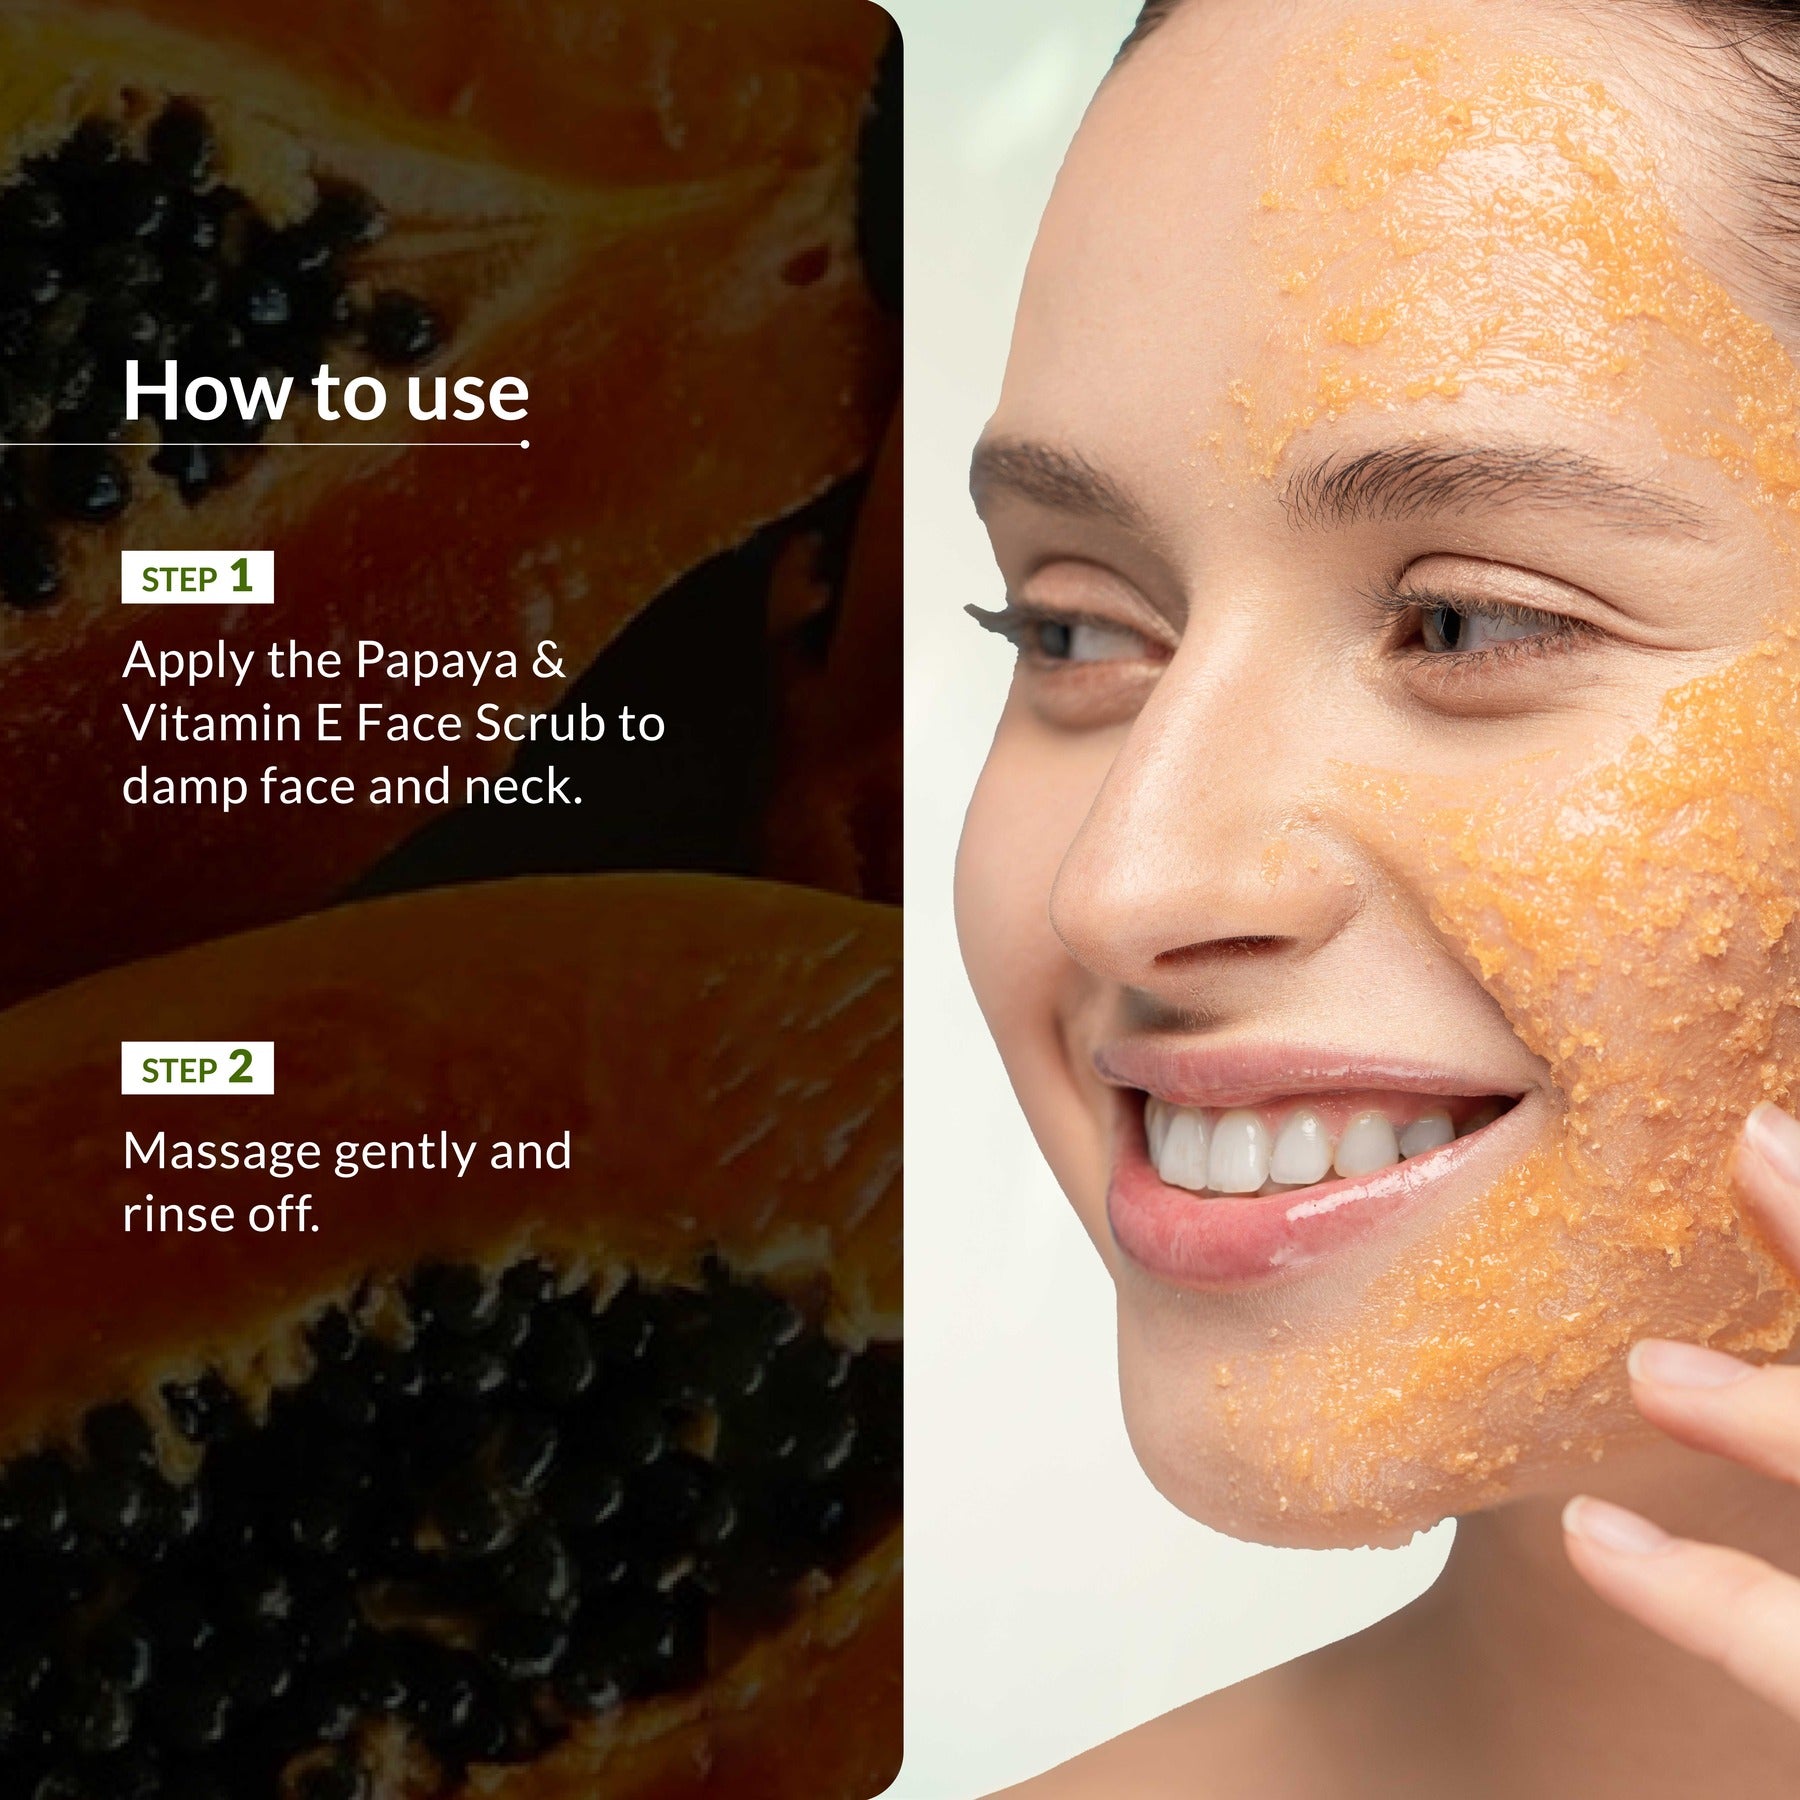 Papaya & Vitamin E Face Scrub